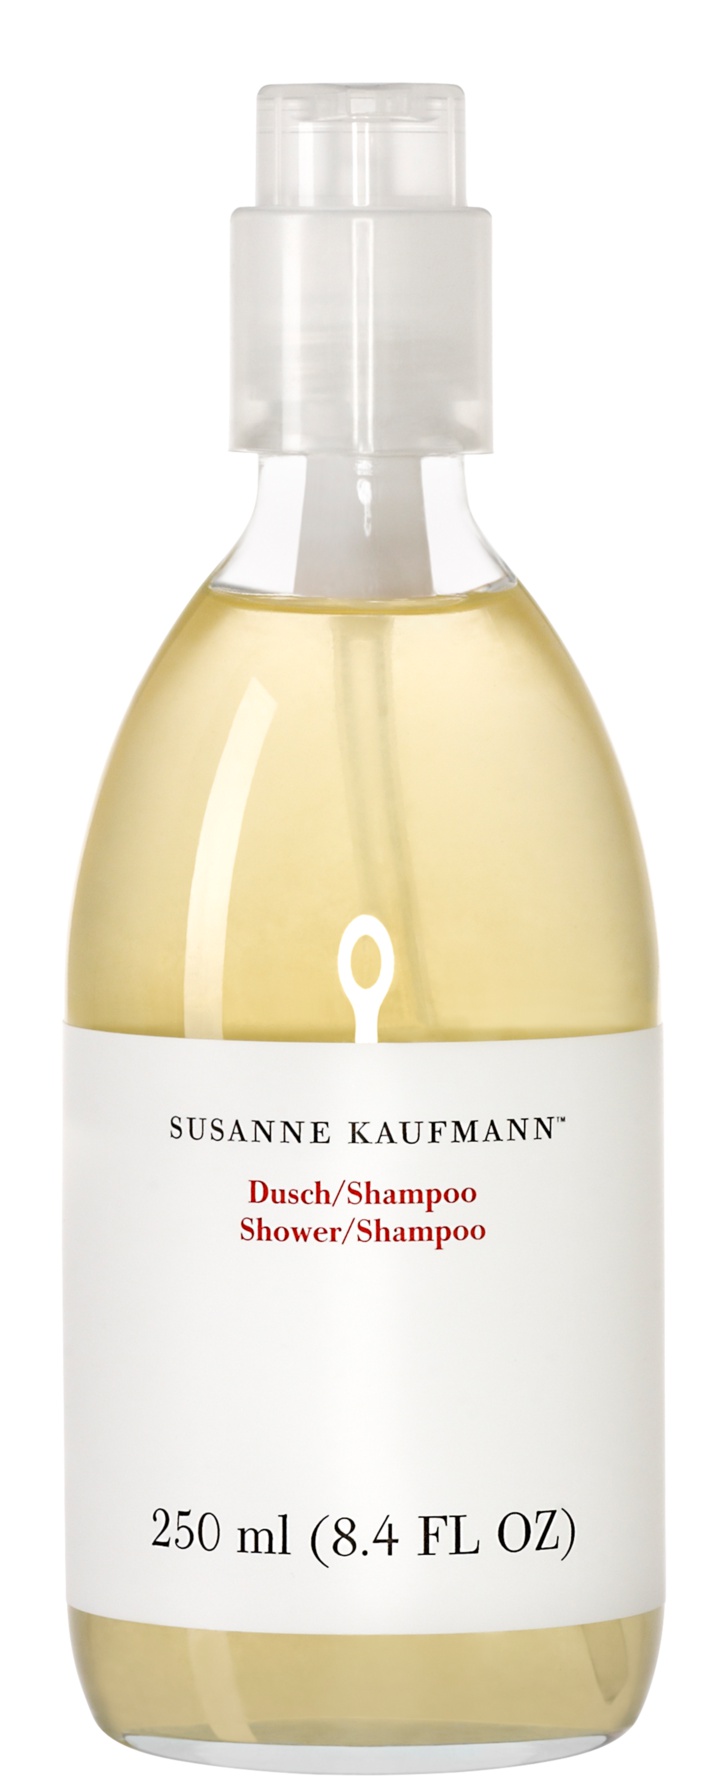 Susanne Kaufmann Shower/Shampoo